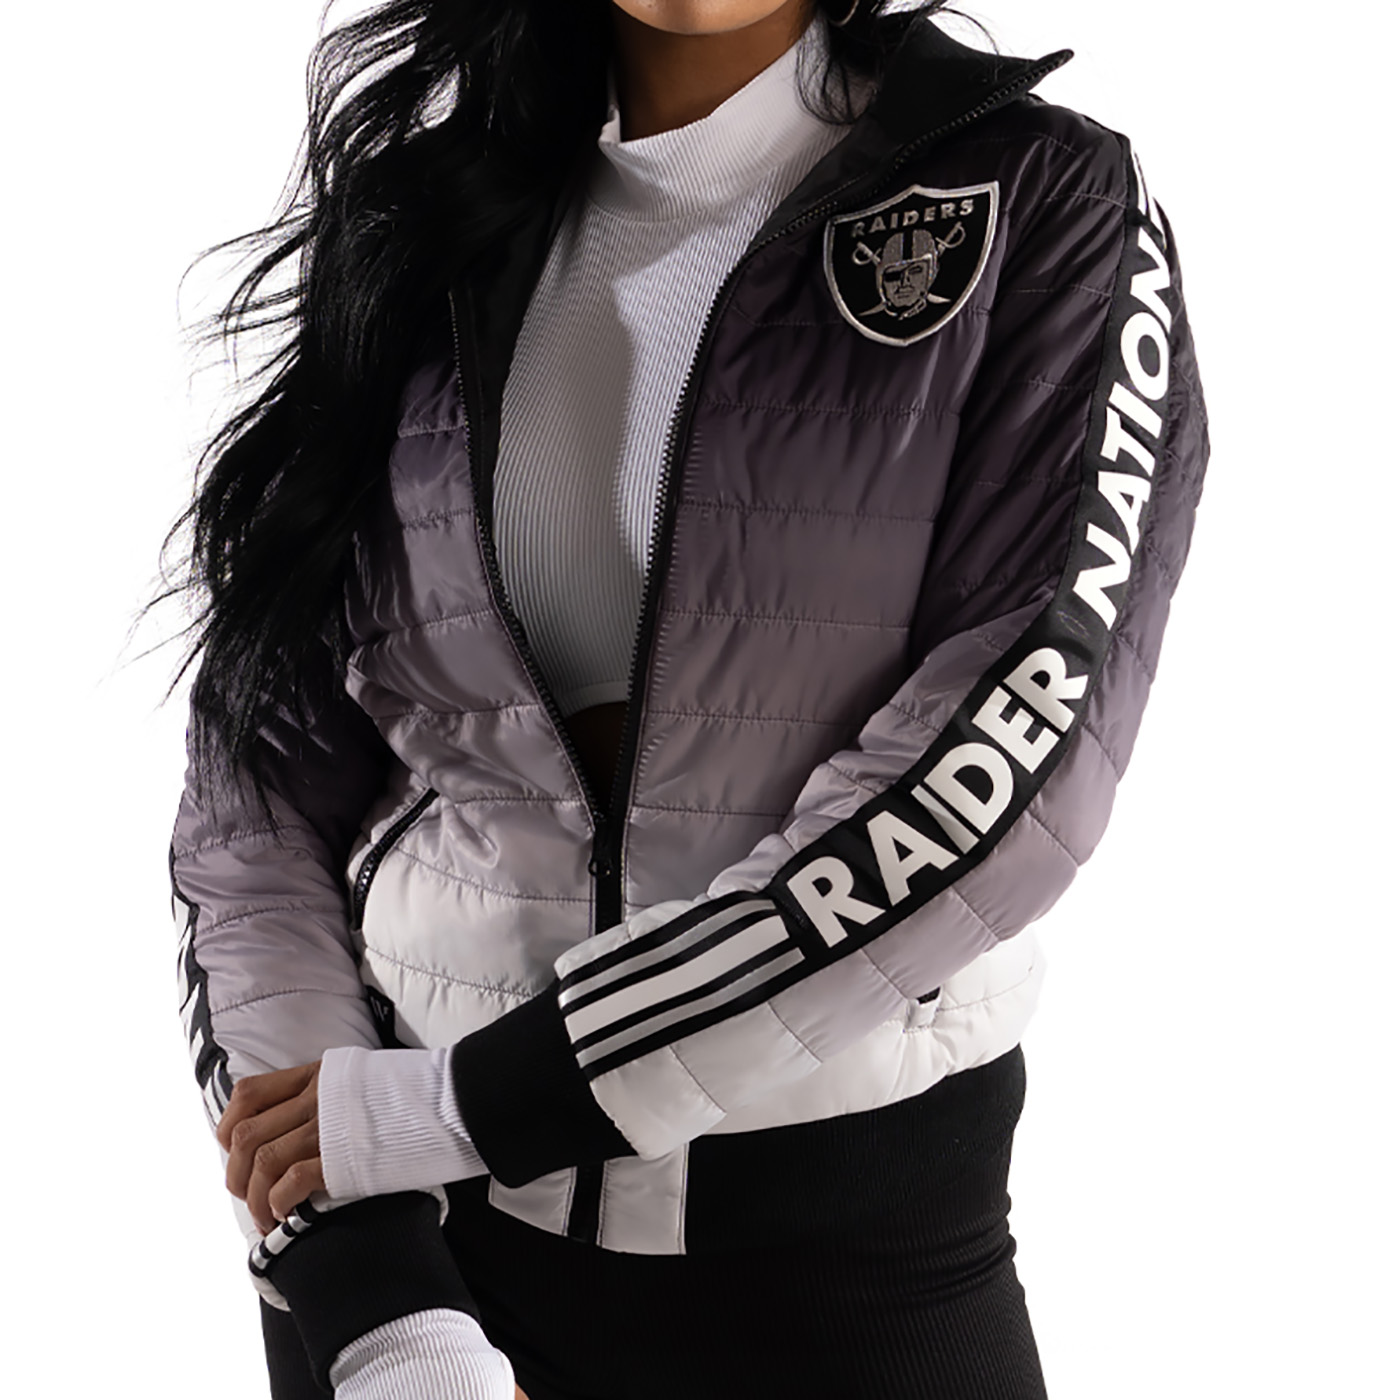 Las Vegas Raiders Women's Glitter Power Play Jacket - Vegas Sports